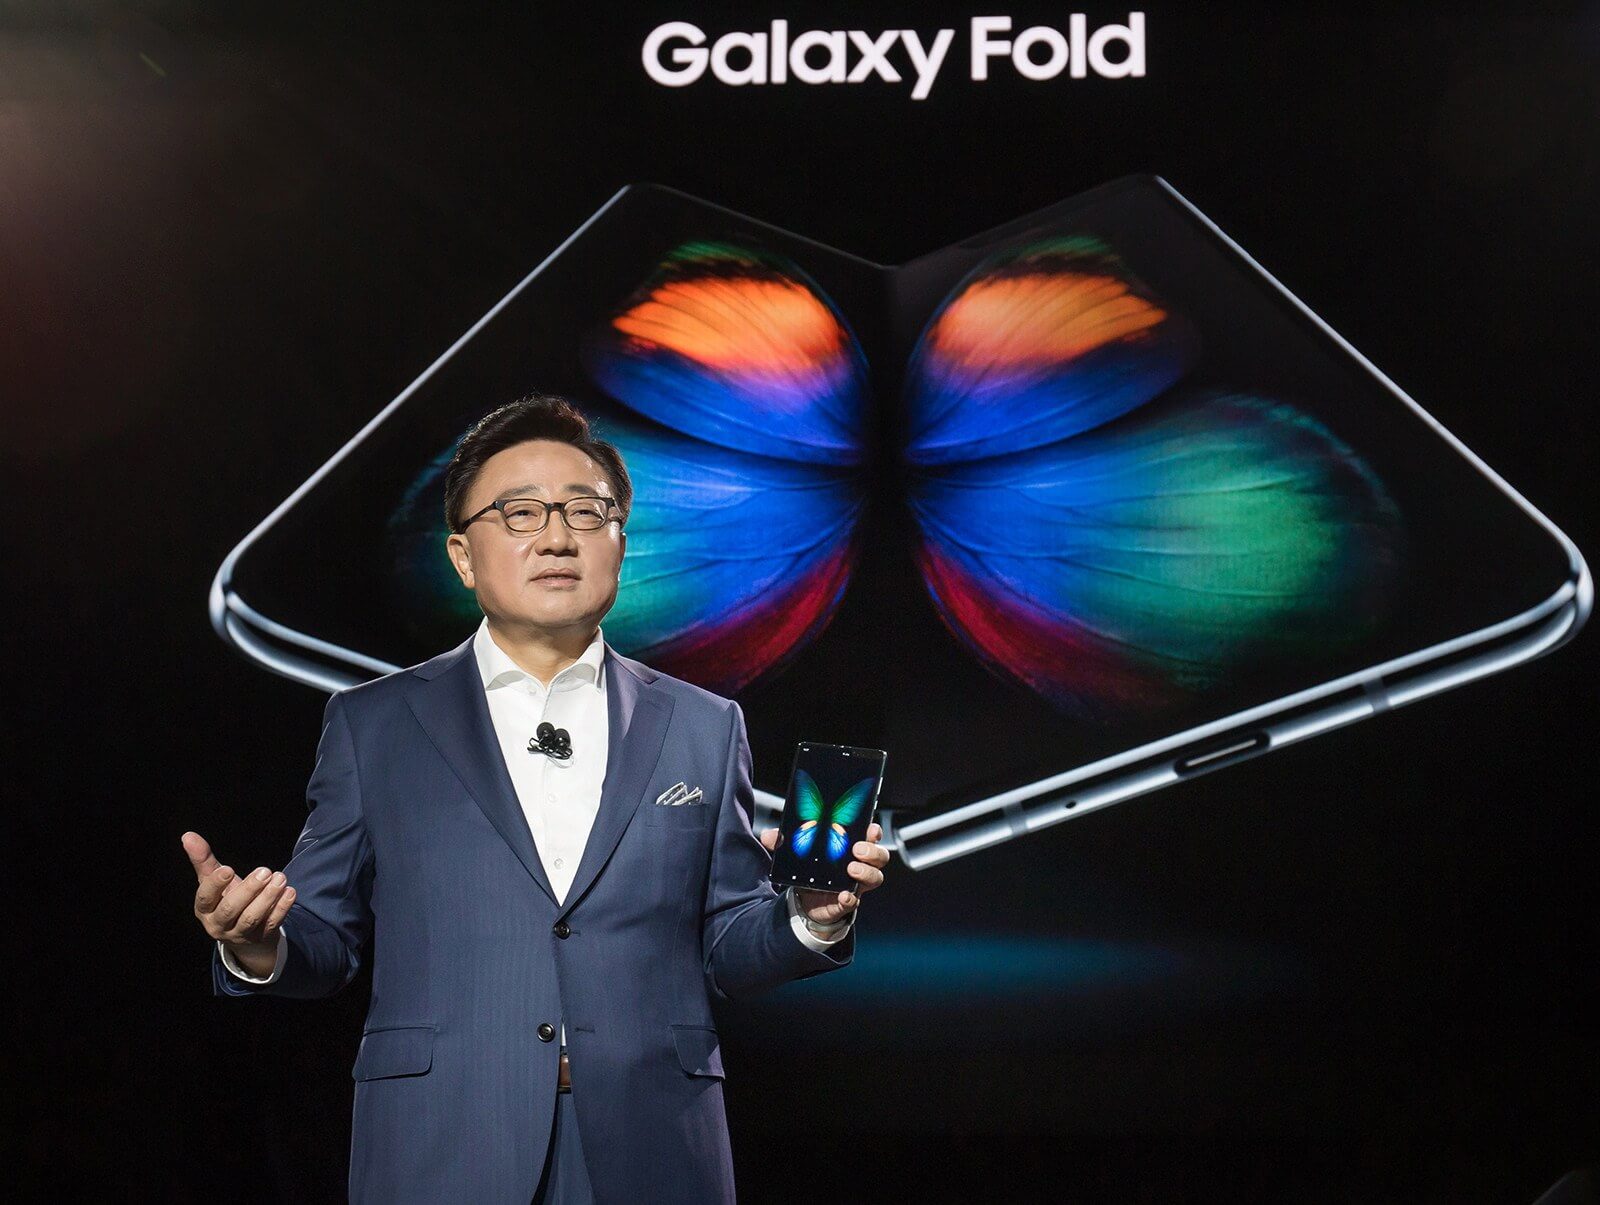 Samsung chief executive takes blame for failed Galaxy Fold launch